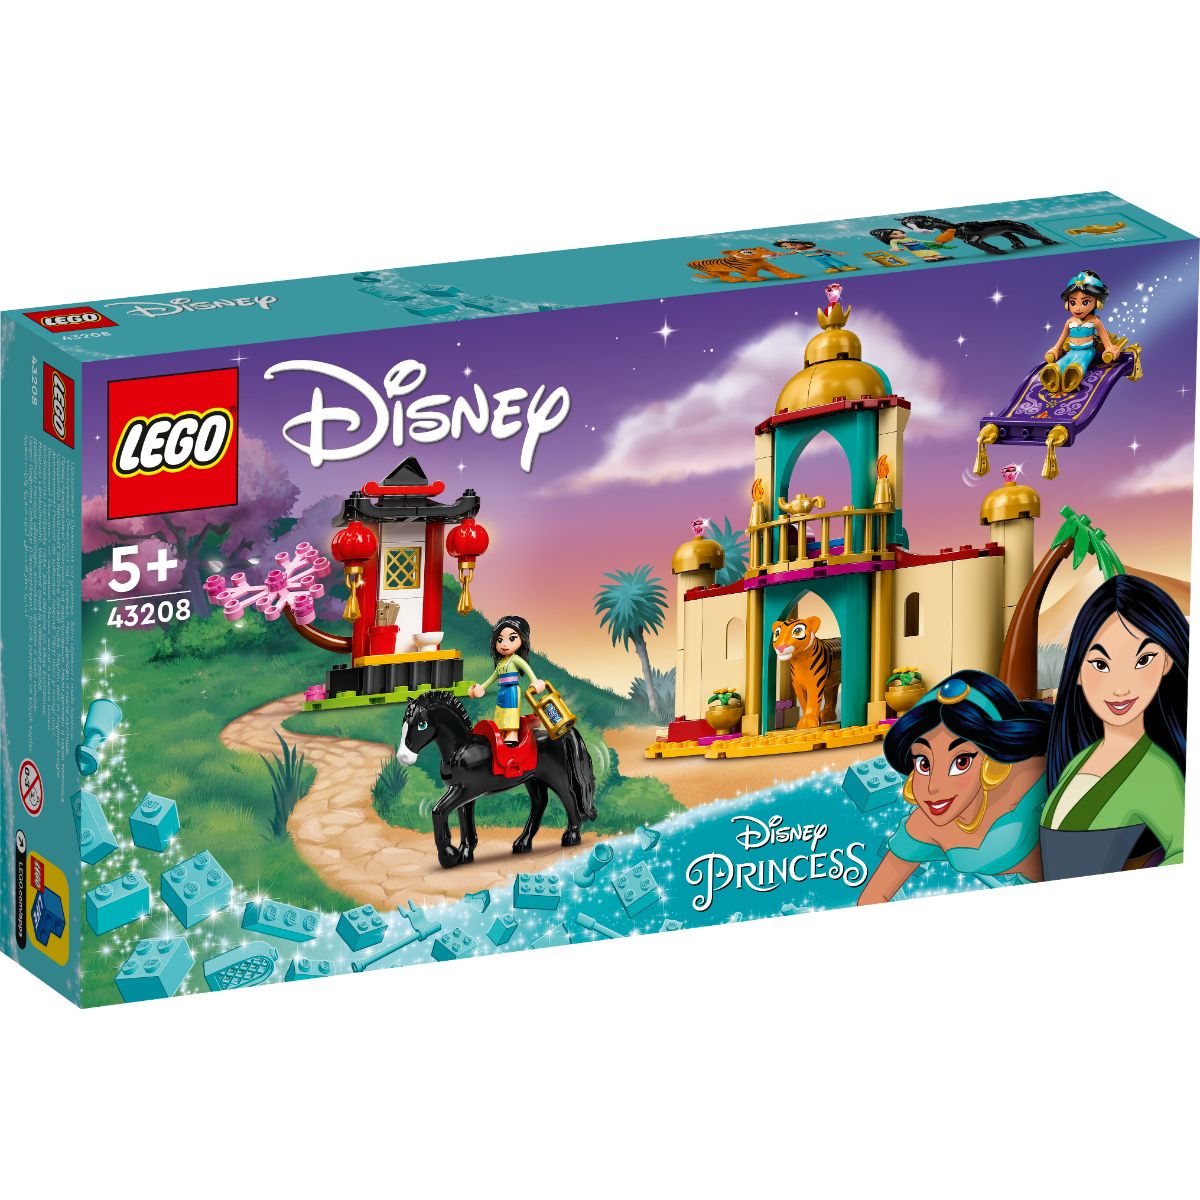 LEGO® Disney Princess – Aventura lui Jasmine si Mulan (43208) LEGO